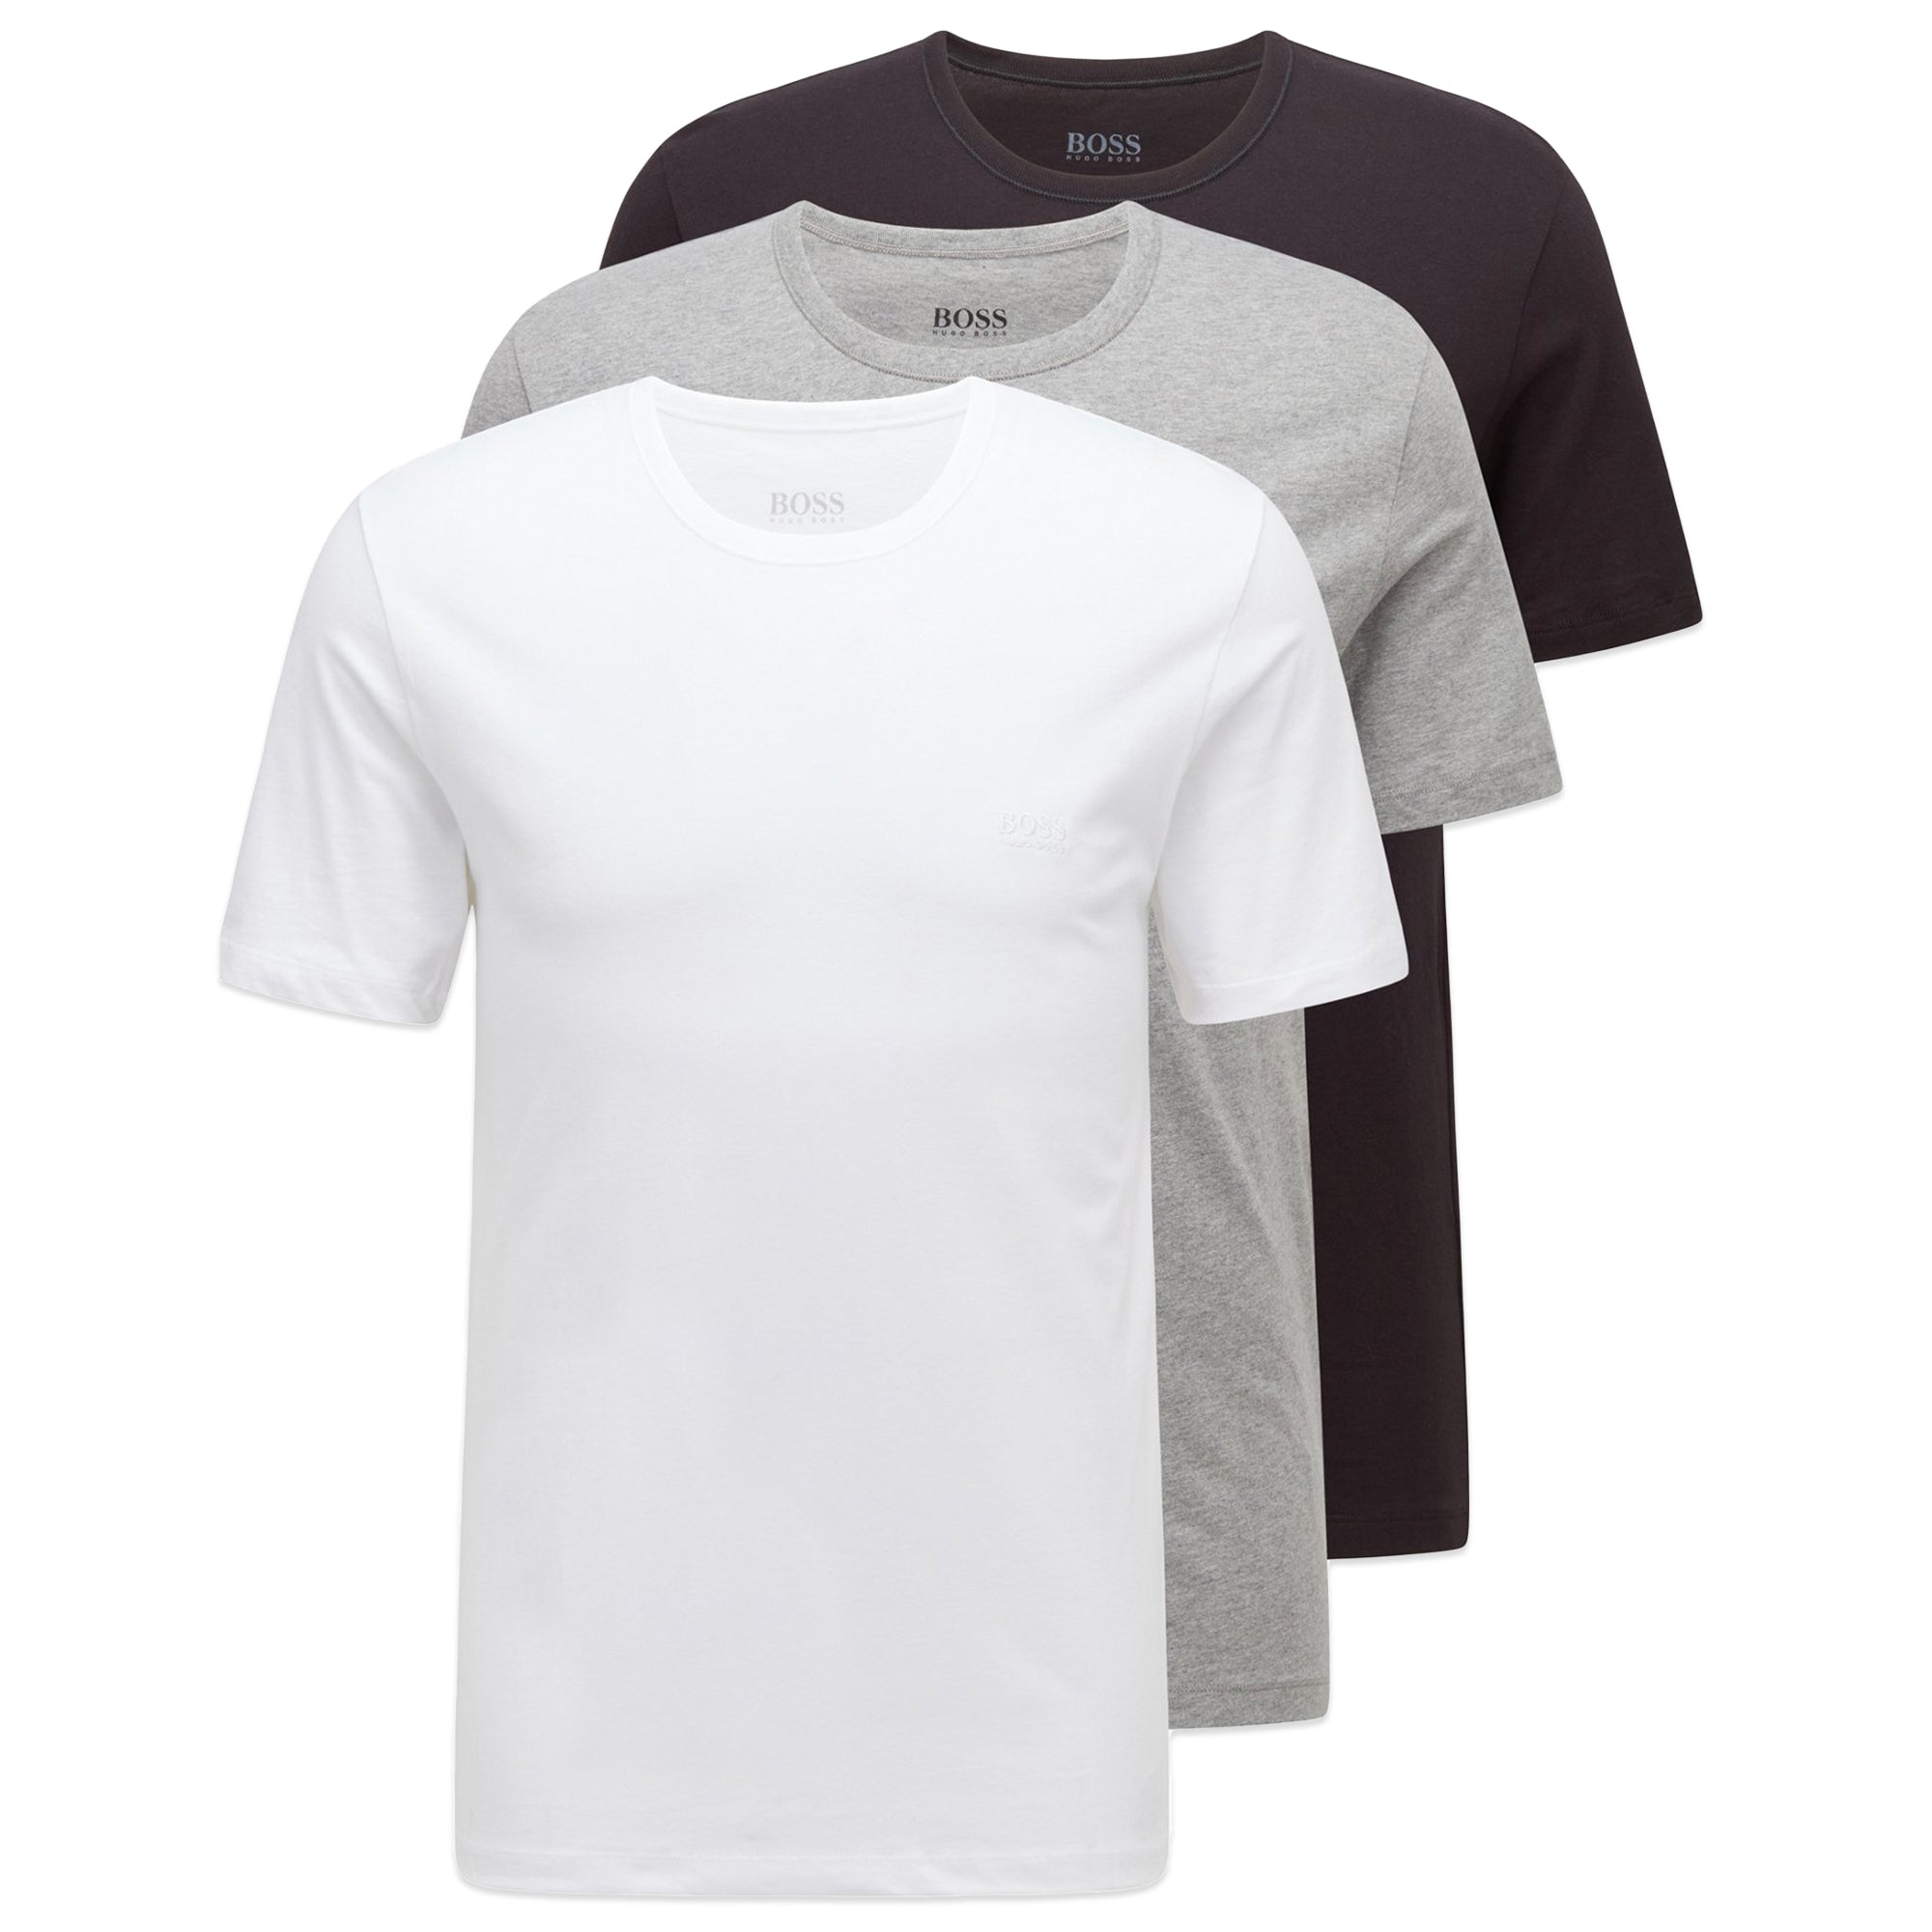 Boss 3 Pack Cotton T-Shirts - White/Grey/Black